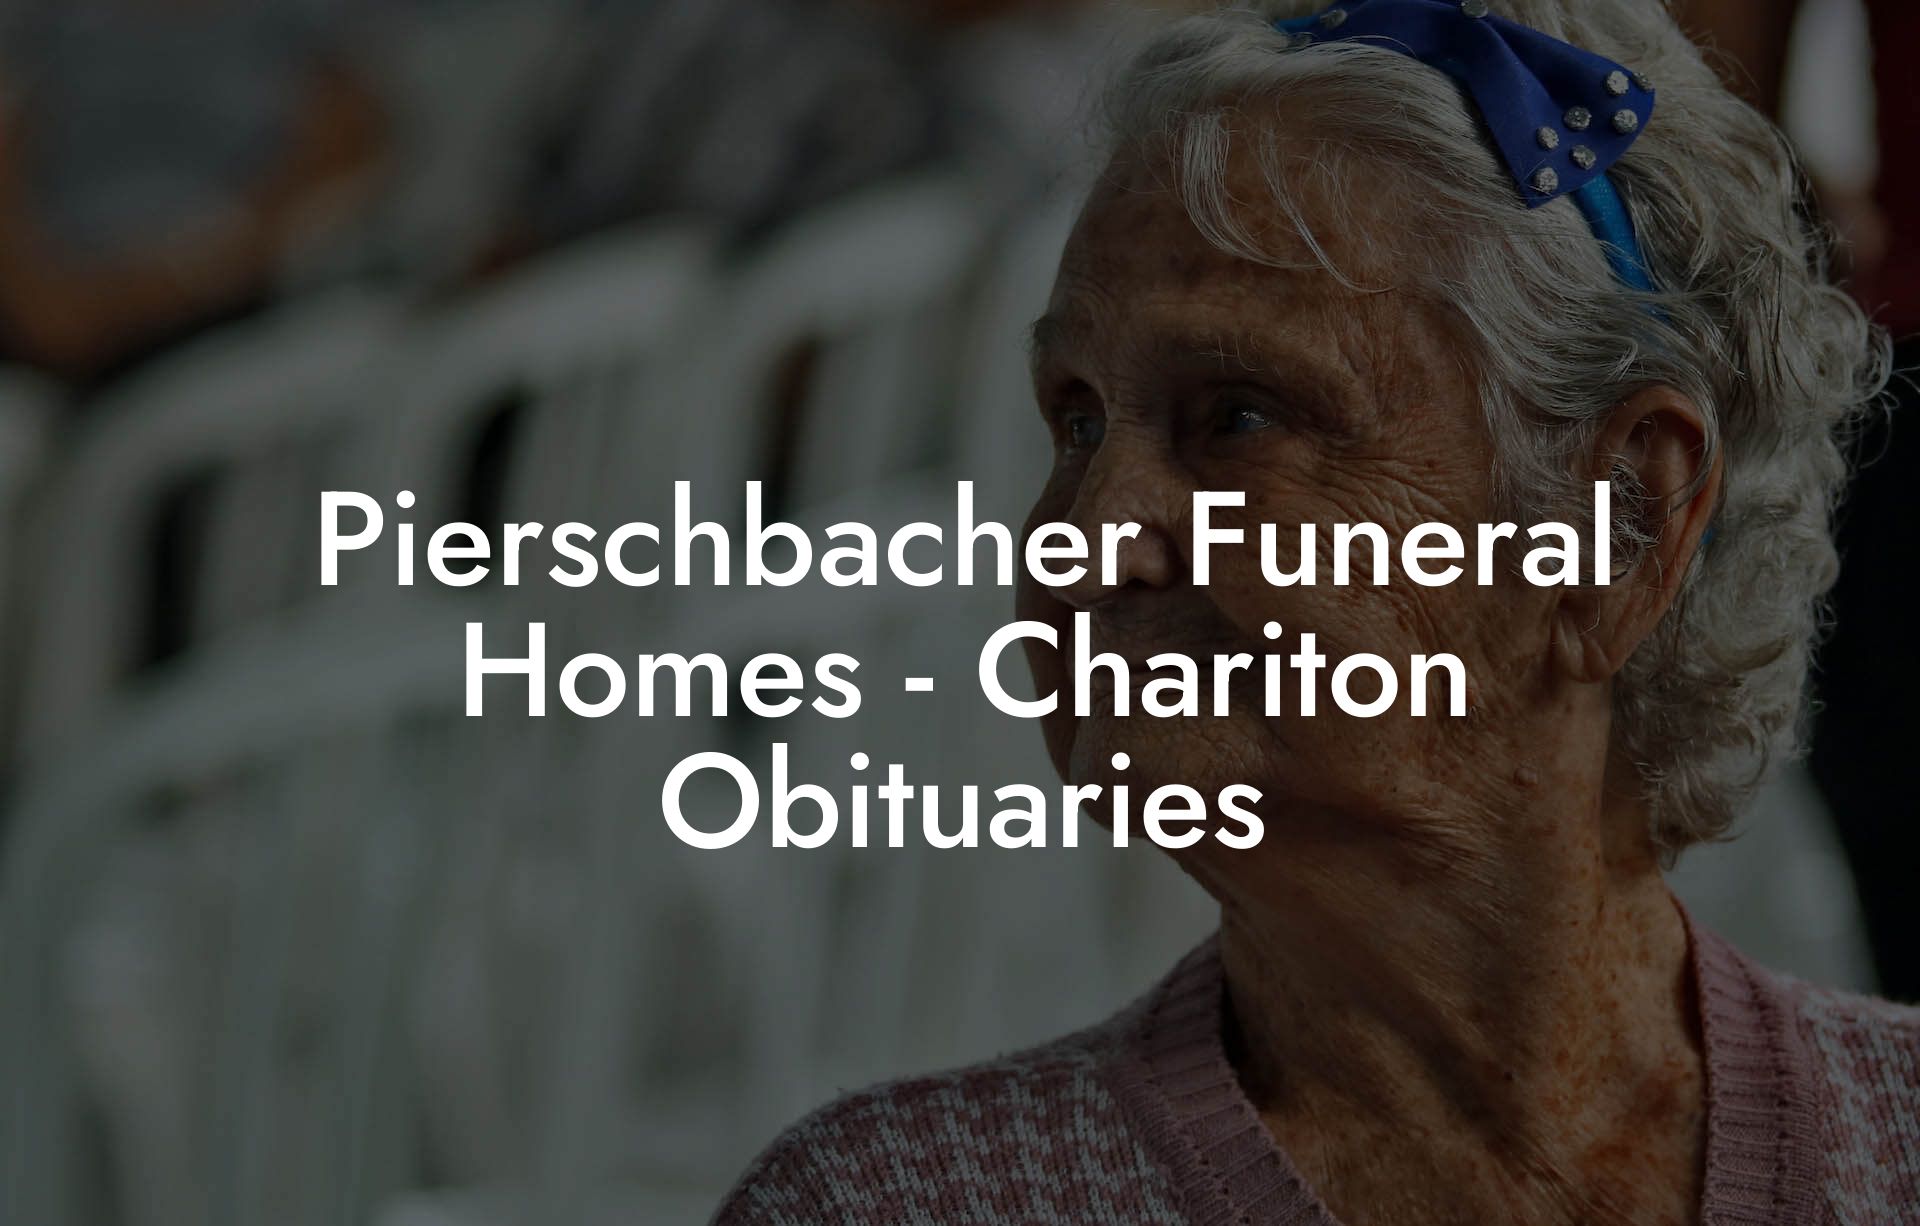 Pierschbacher Funeral Homes - Chariton Obituaries